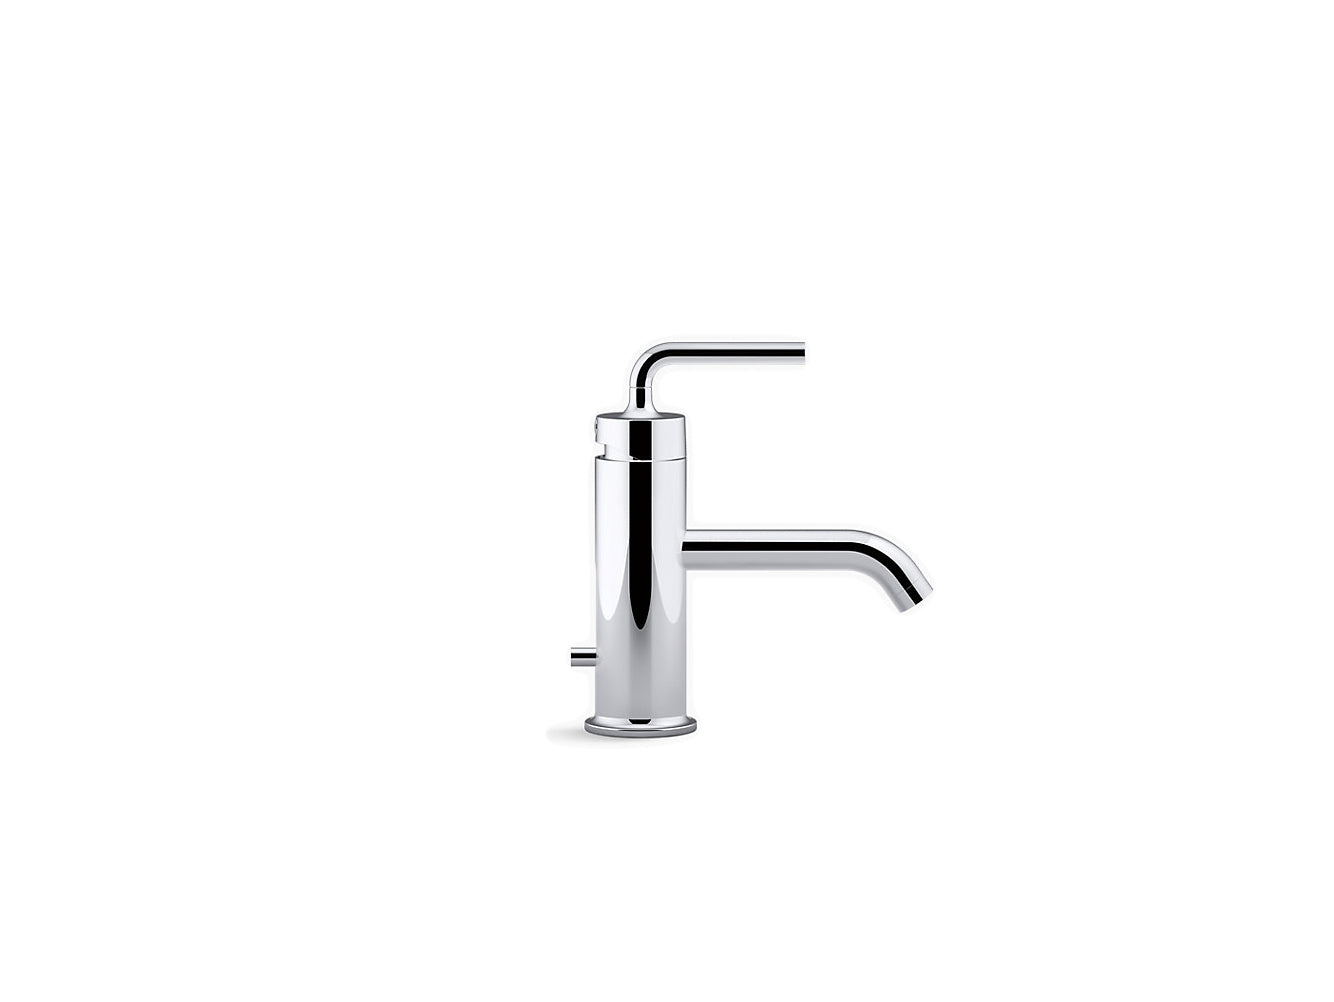 Kohler Purist Single Handle Bathroom Sink Faucet With Straight Lever Handle - Chrome